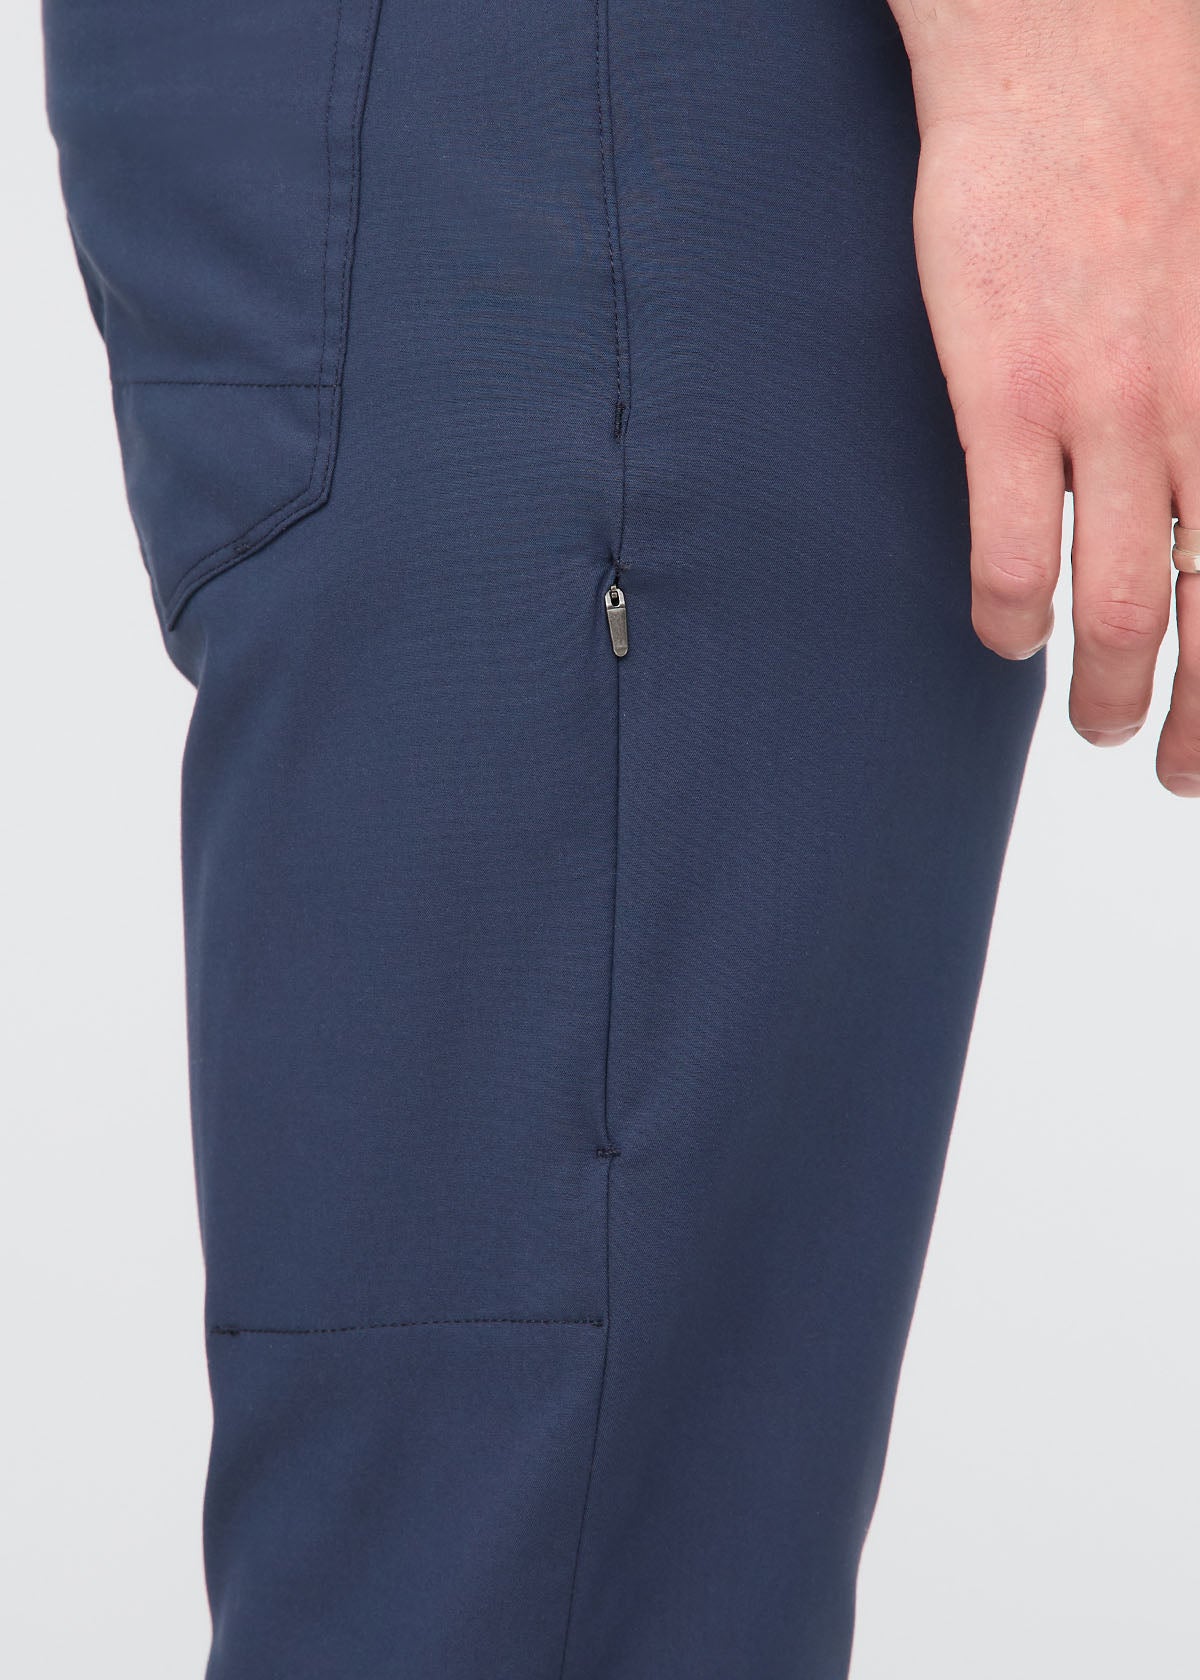 mens navy slim fit stretch pant side thigh zip pocket